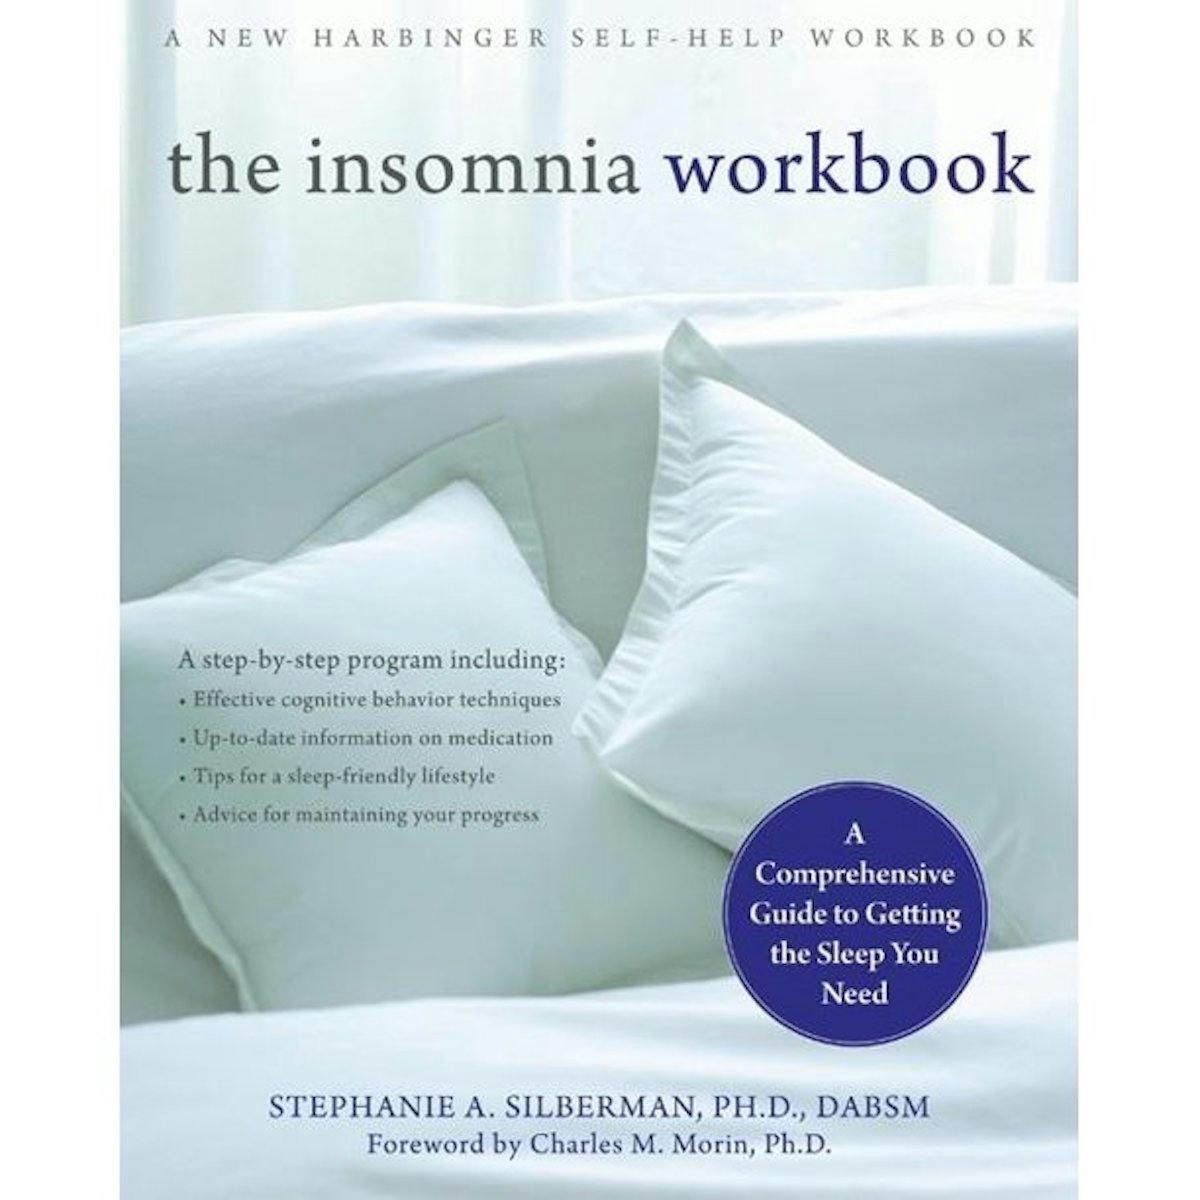 the insomnia workbook by stephanie silberman